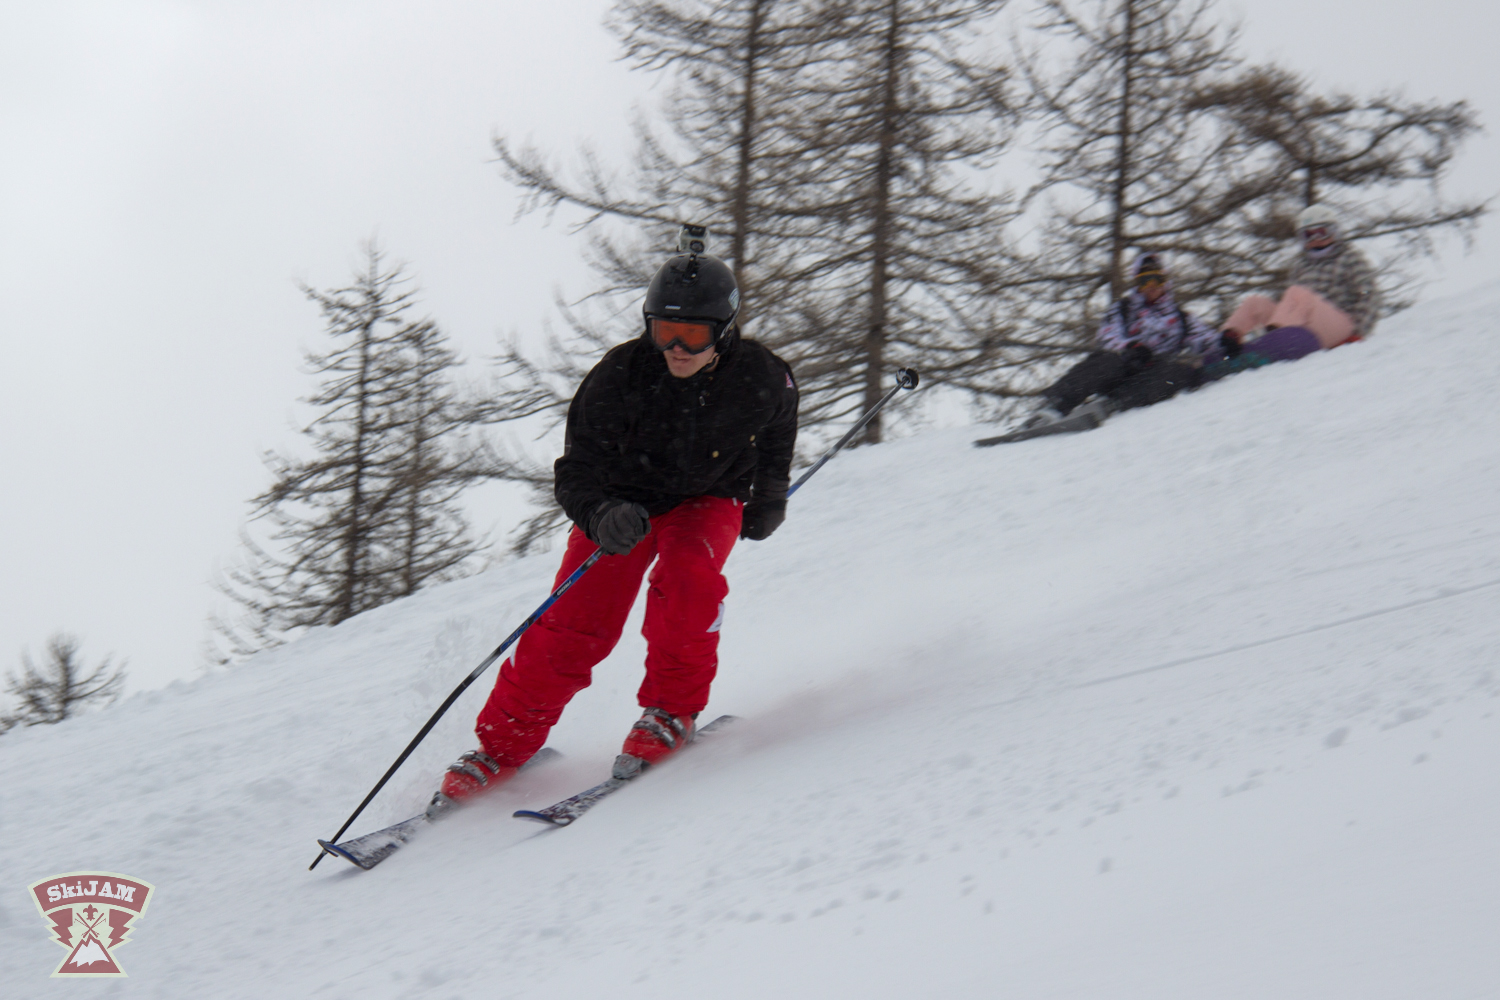 2013-skijam-havasi-mate-034.jpg